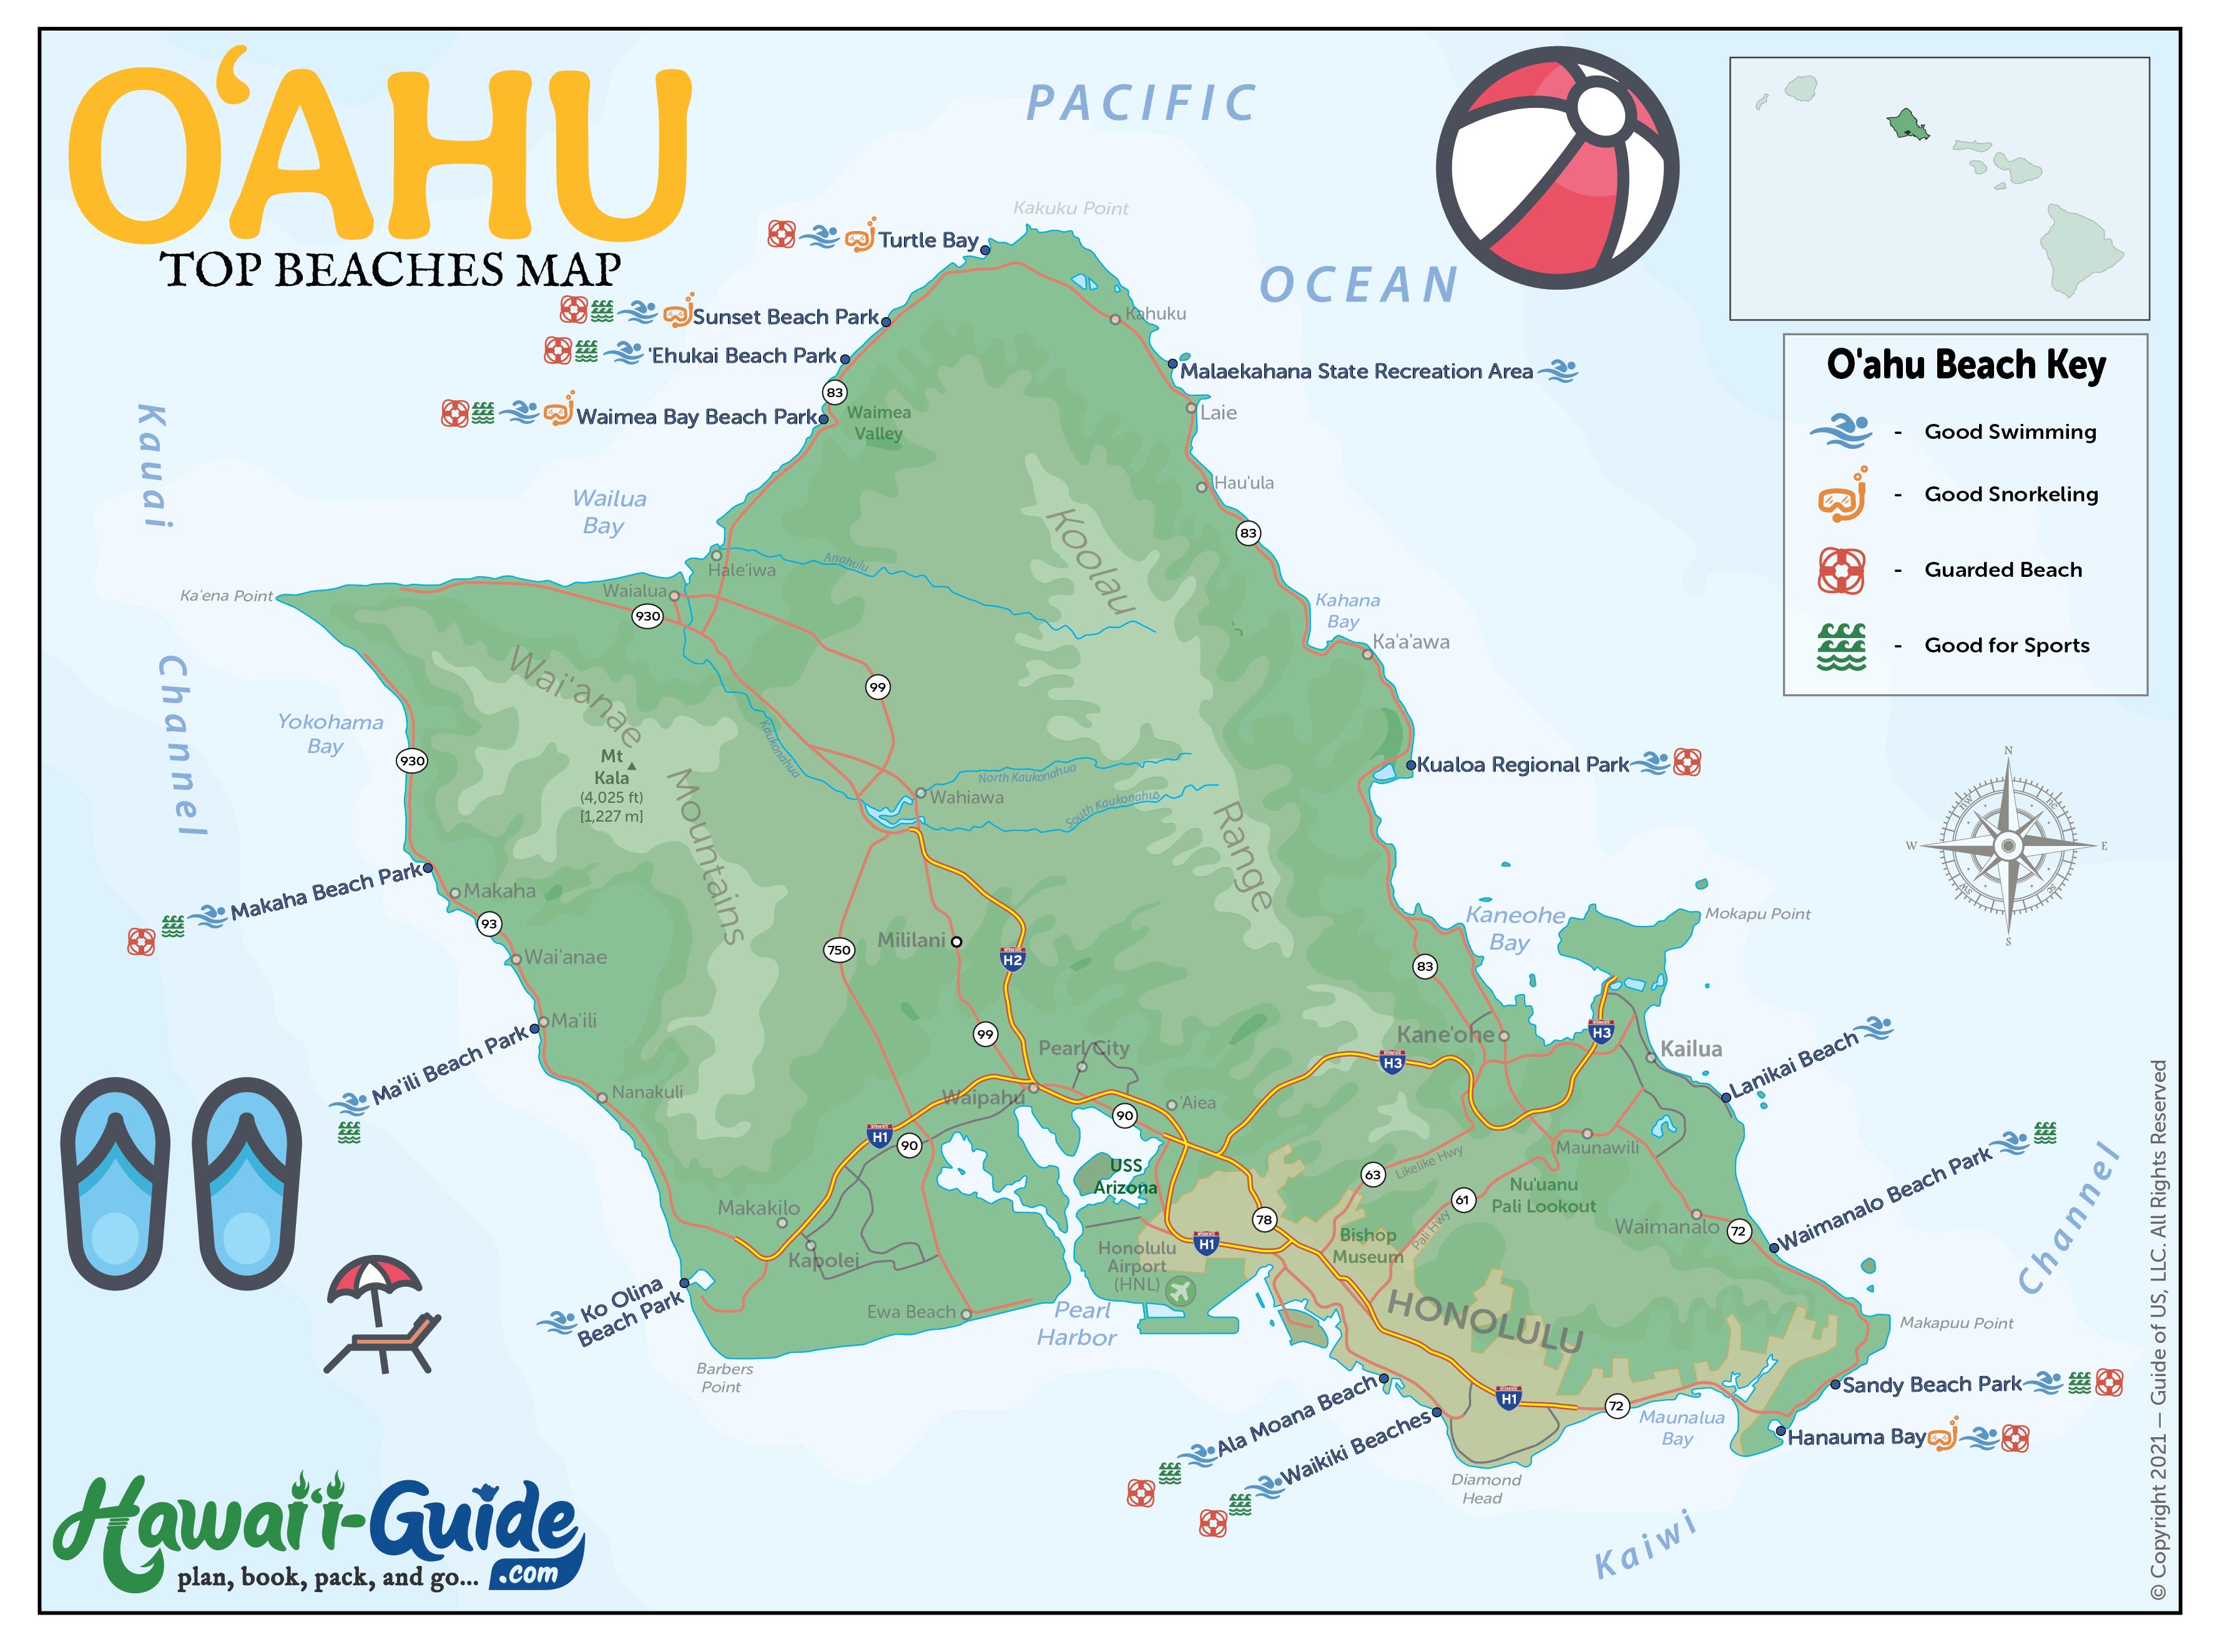 Hawaii Guide Oahu Beaches Map V5 ?utm Source=www.hawaii Guide.com&utm Medium=referral&utm Campaign=cta Button